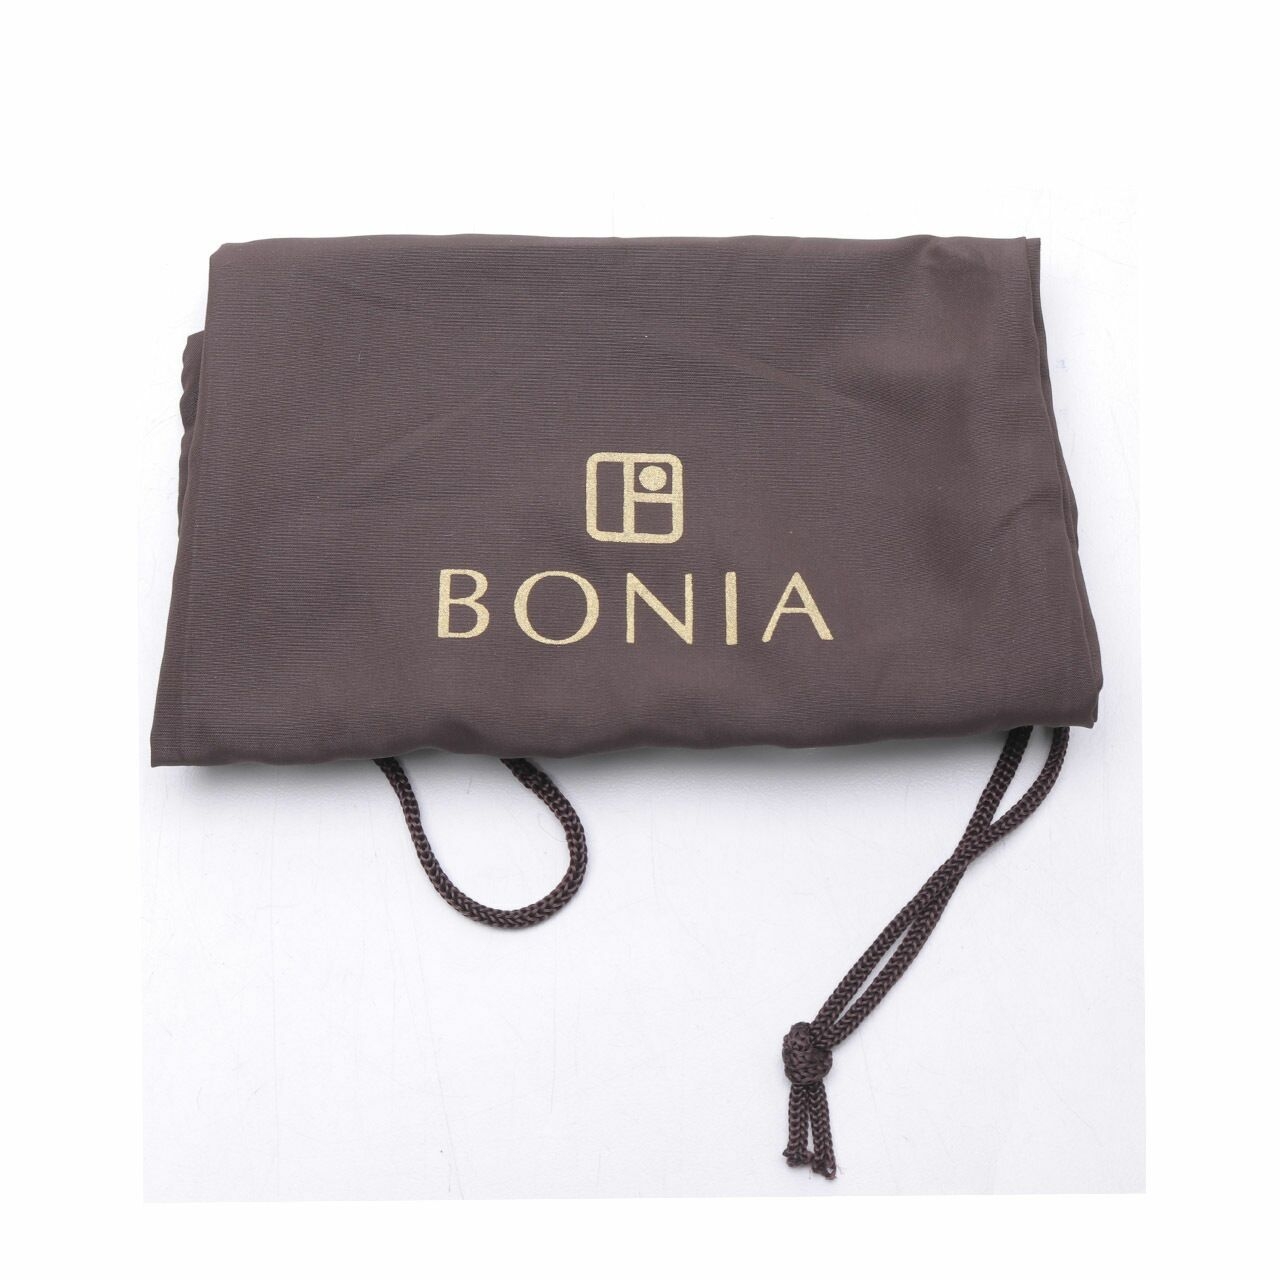 Bonia Brown Wallet